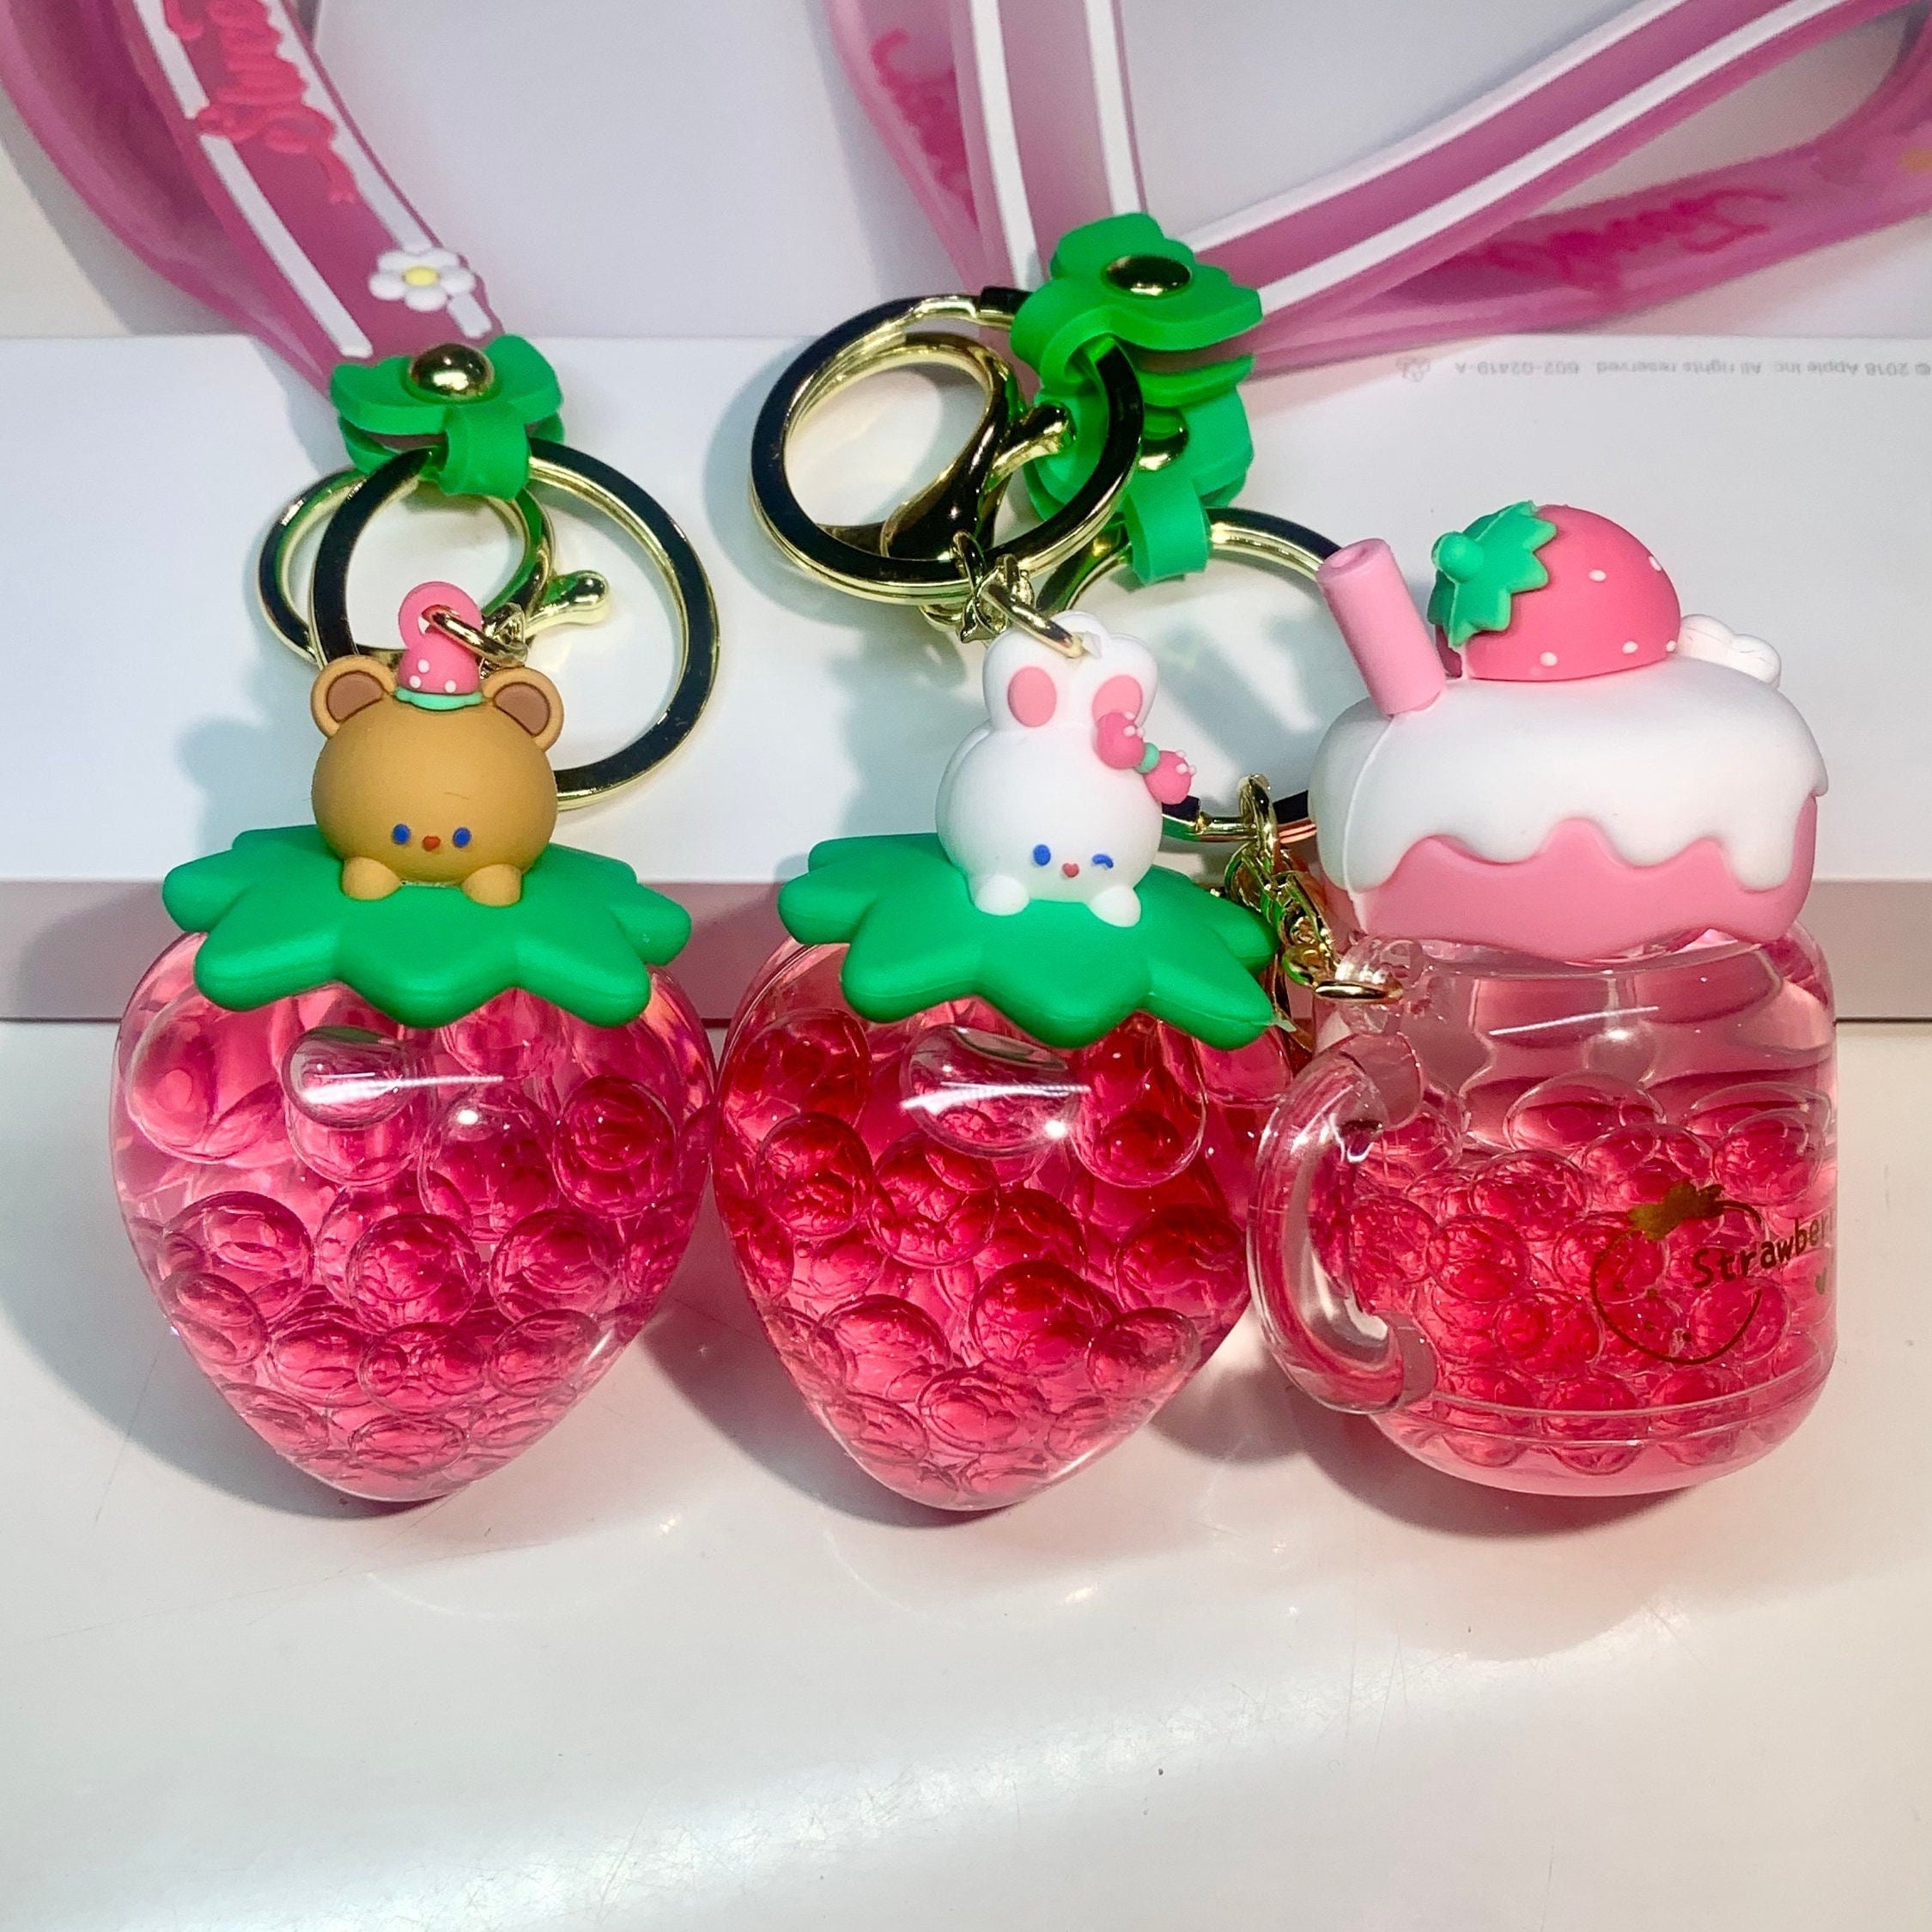 Shaketea Cute Shiba Inu Keychains for Women's Car Keys, Durable and Kawaii Pink Strawberry